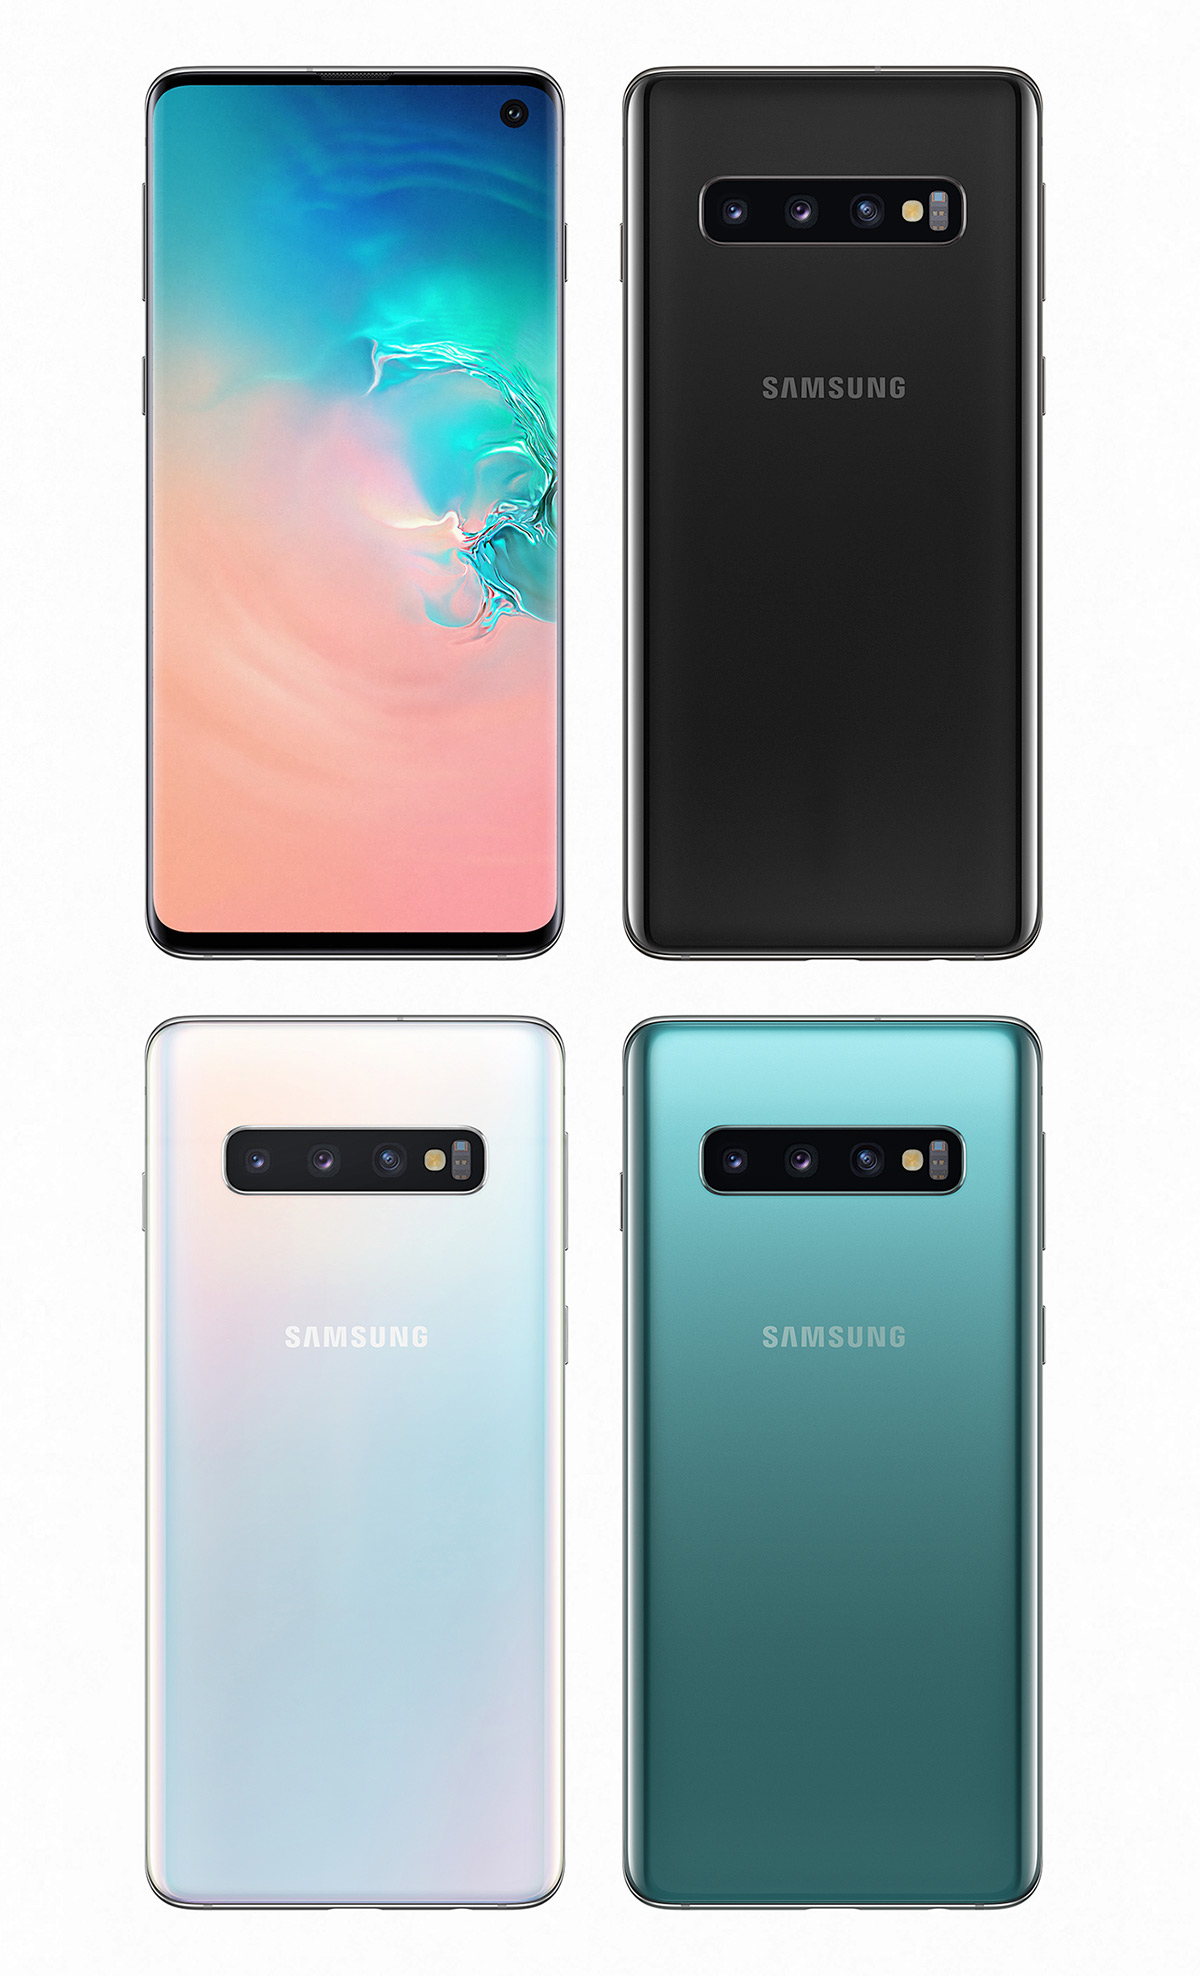 Samsung Galaxy S10/S10+ (SM-G970F /G975F)